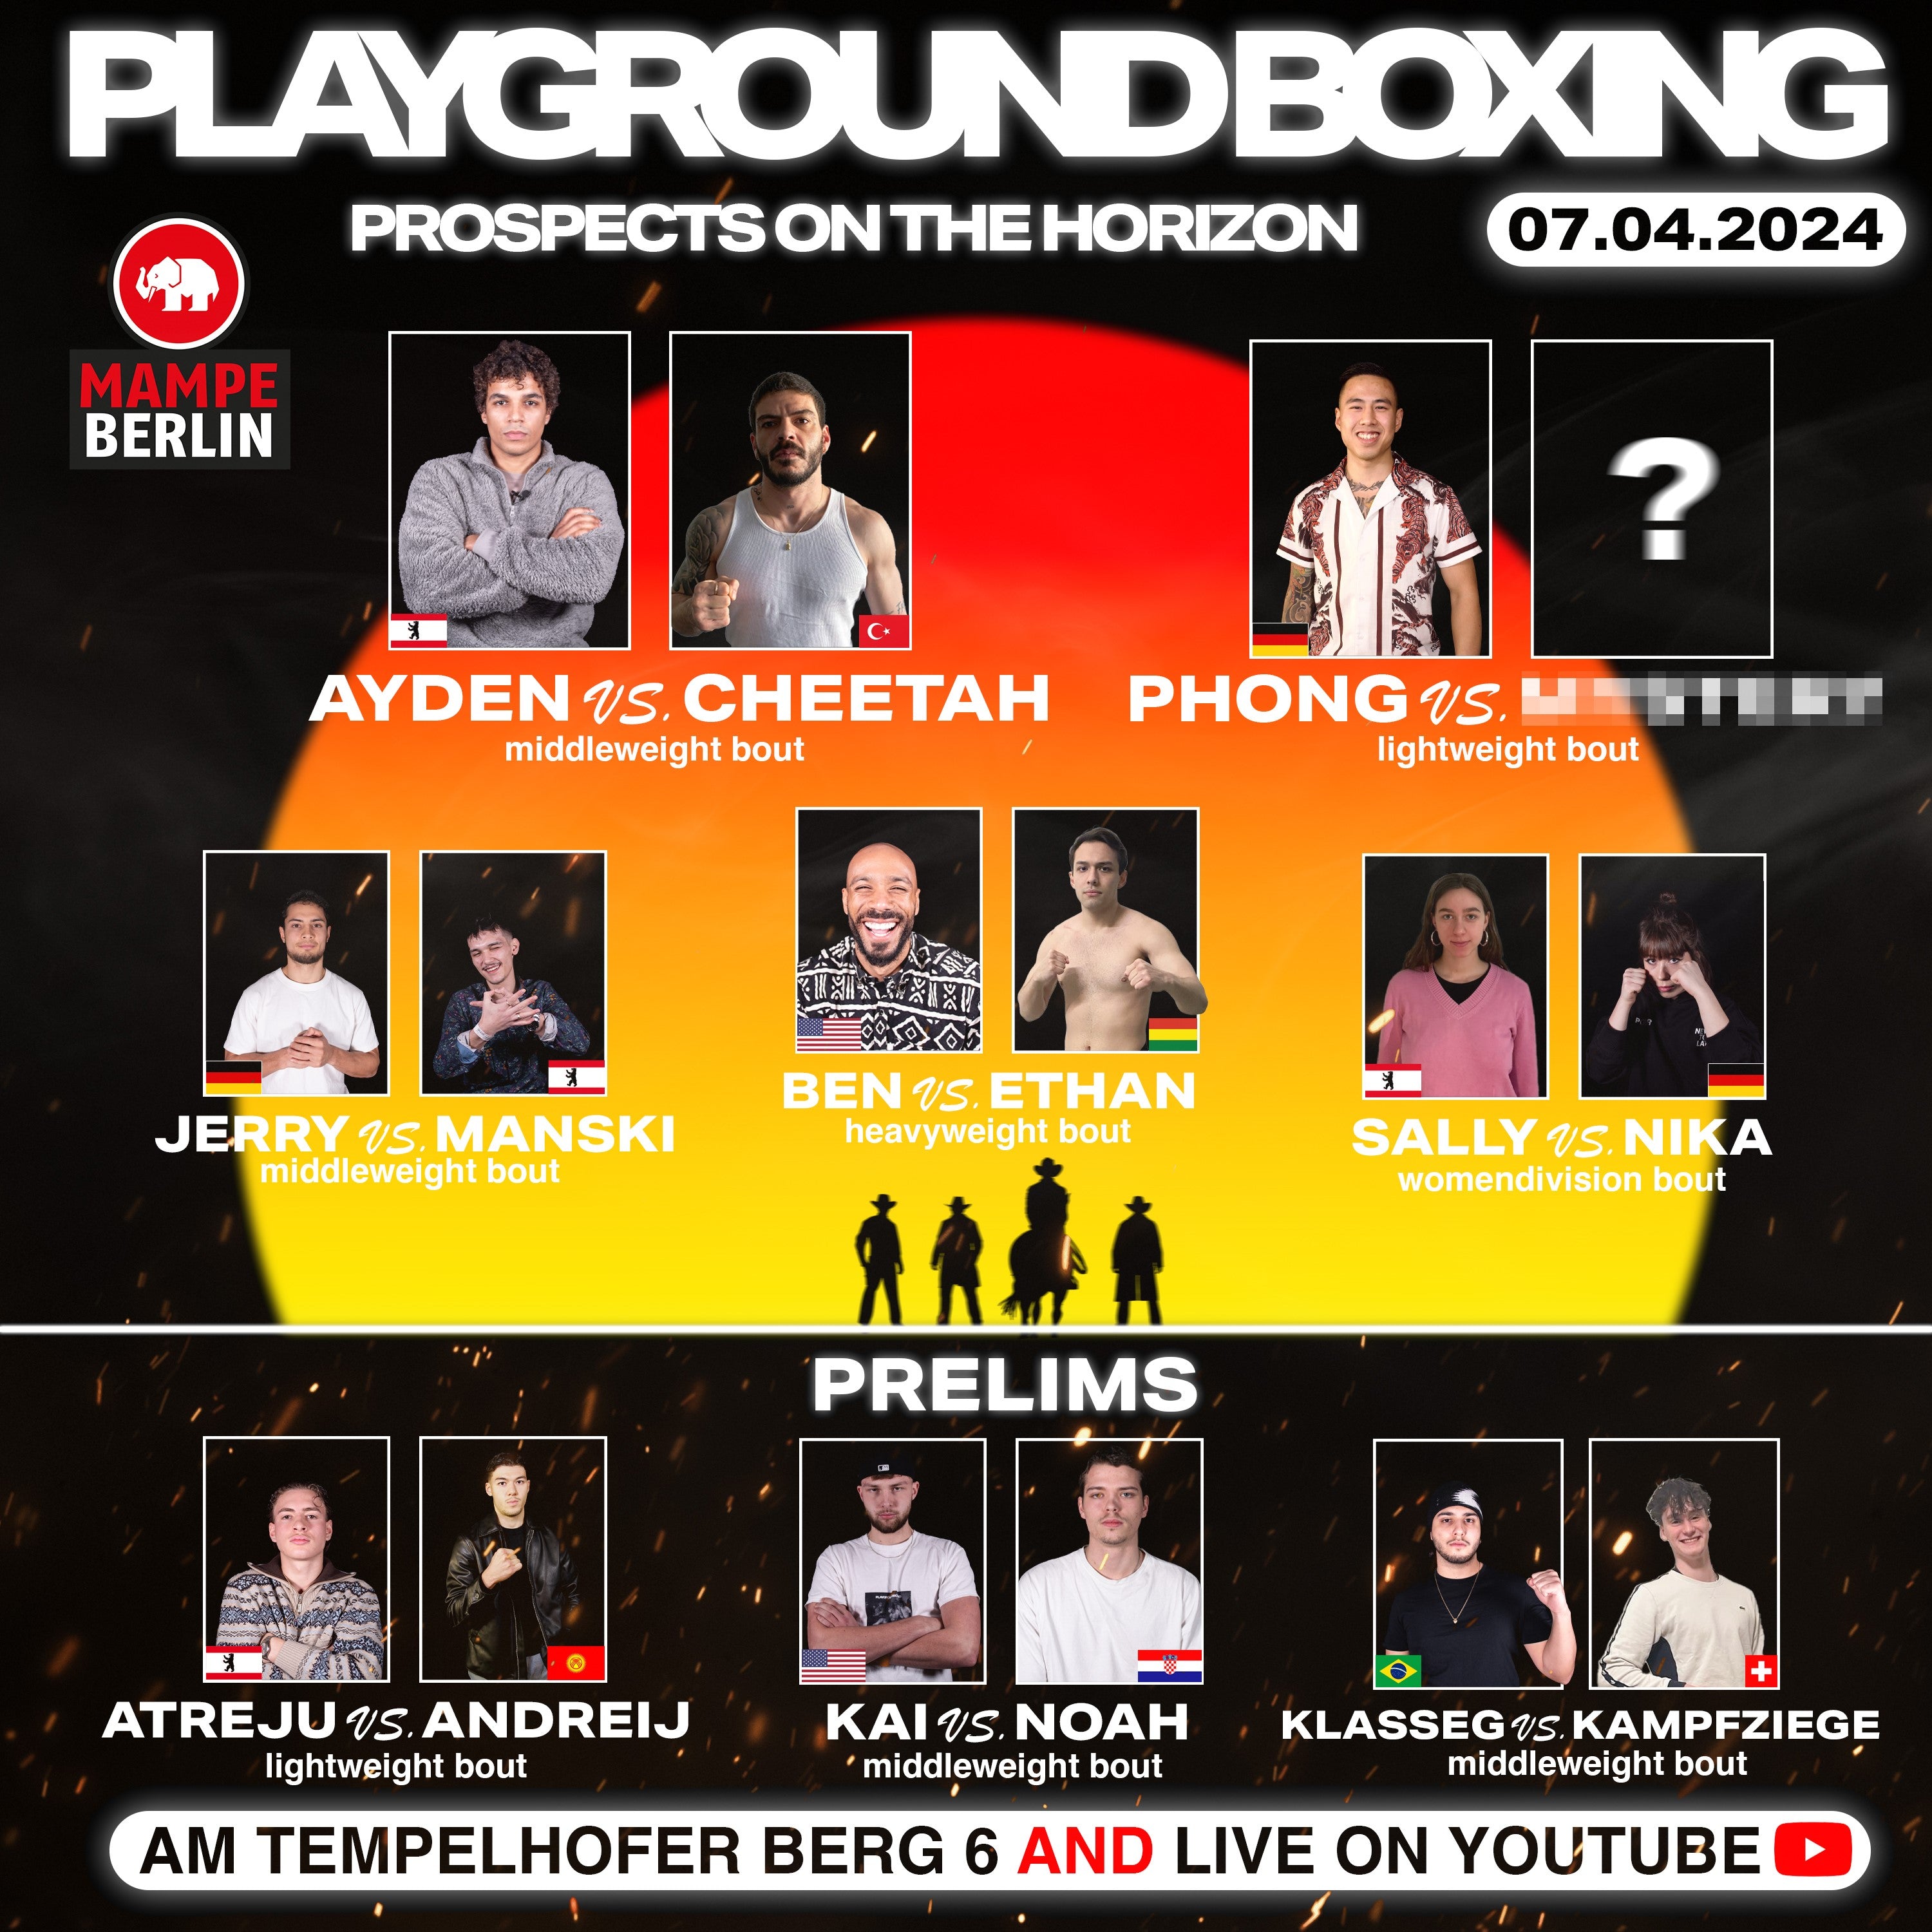 Playground Boxing S2V2 “Prospects on the Horizon”